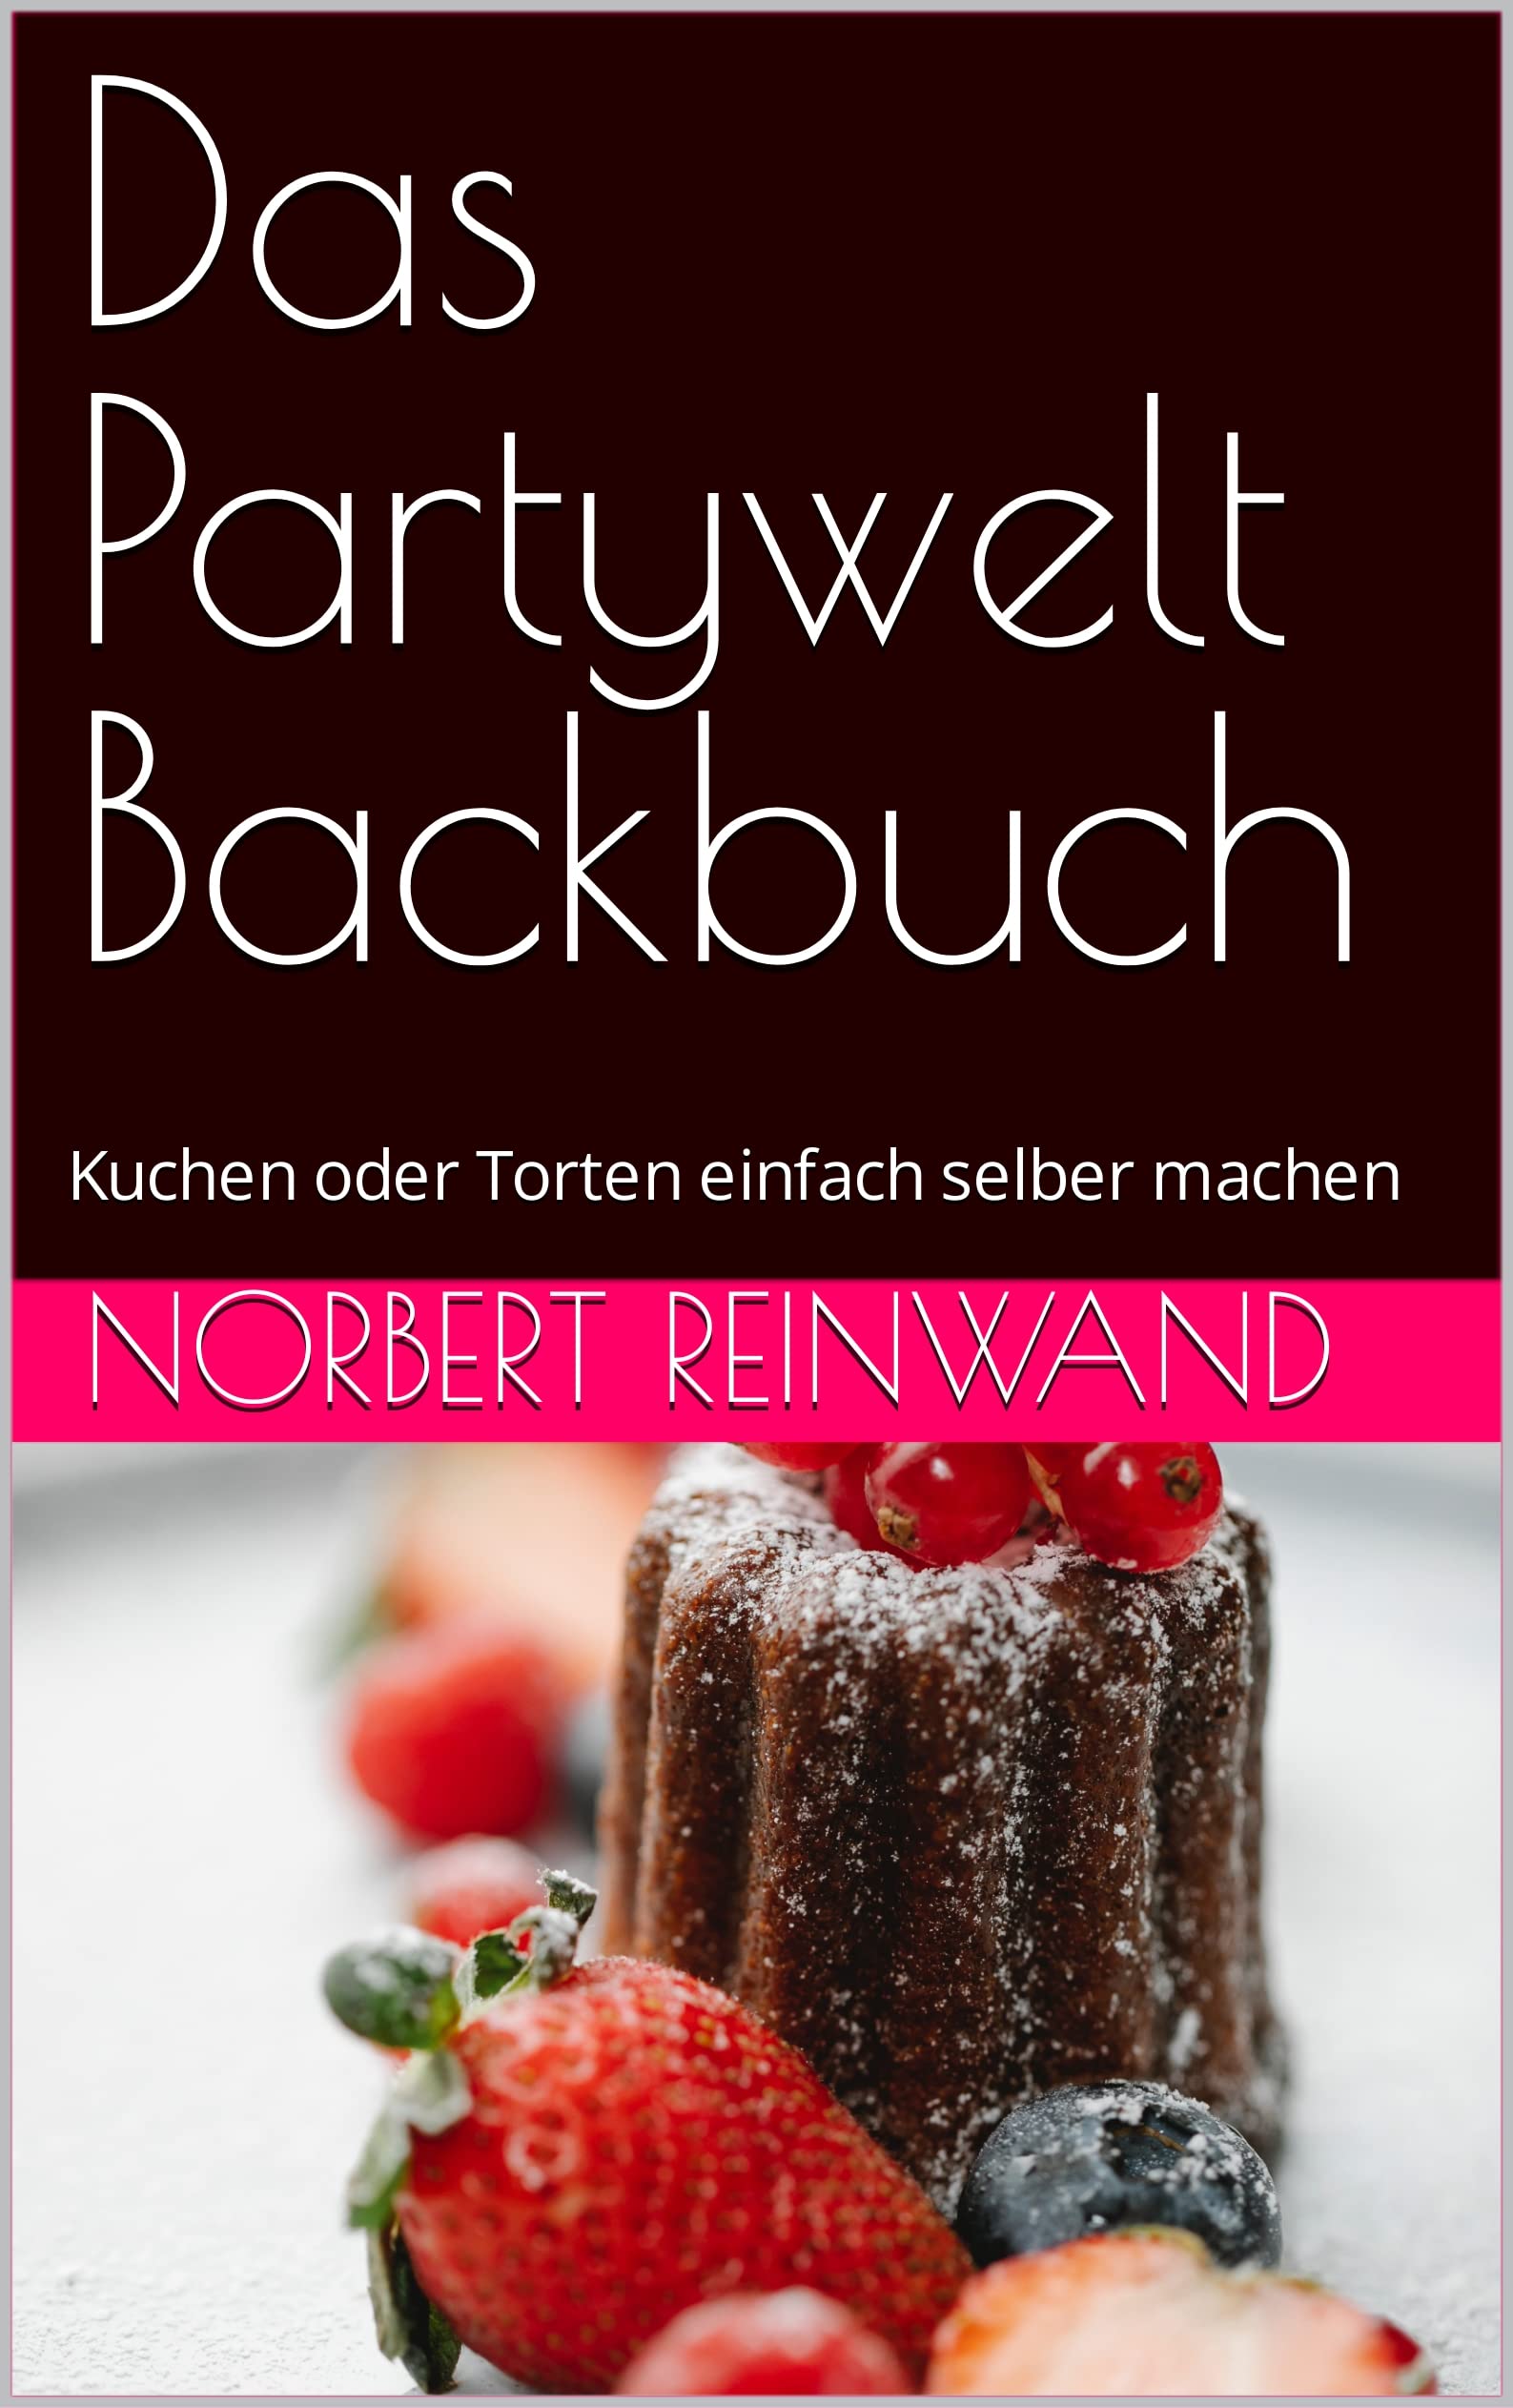 Das Partywelt Backbuch (German Edition)